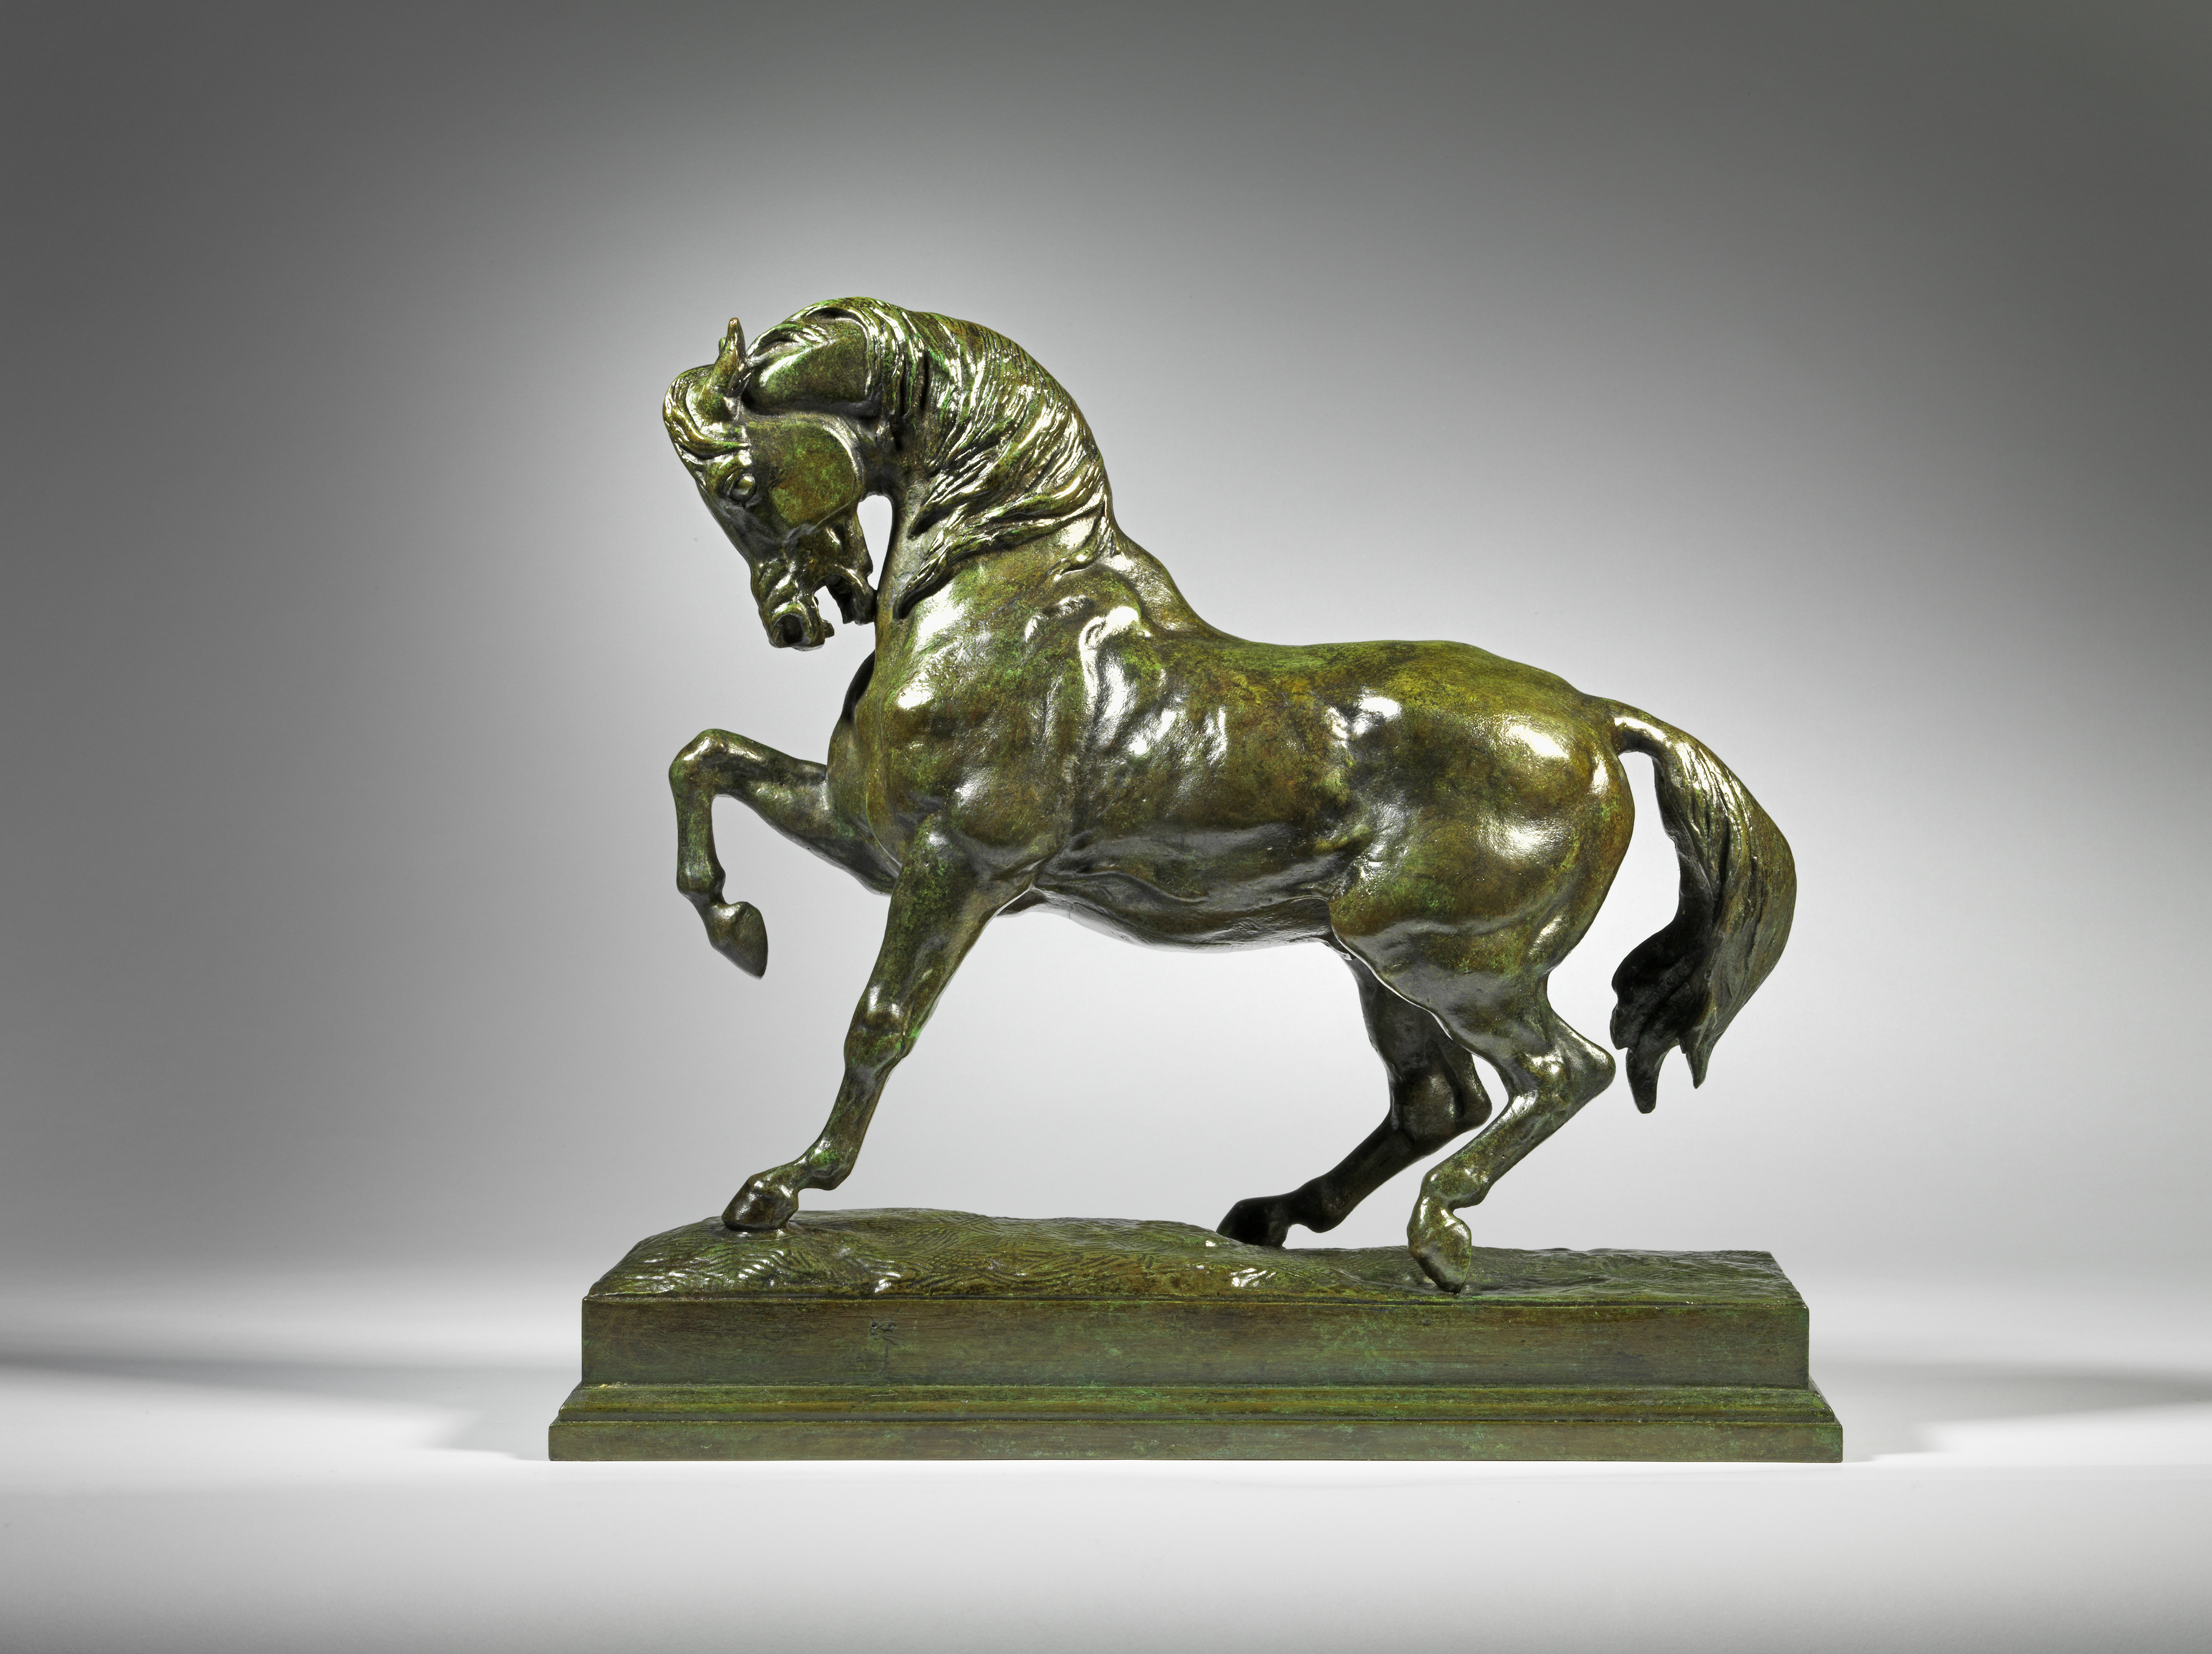 Turkish Horse, right leg raised, c. 1840